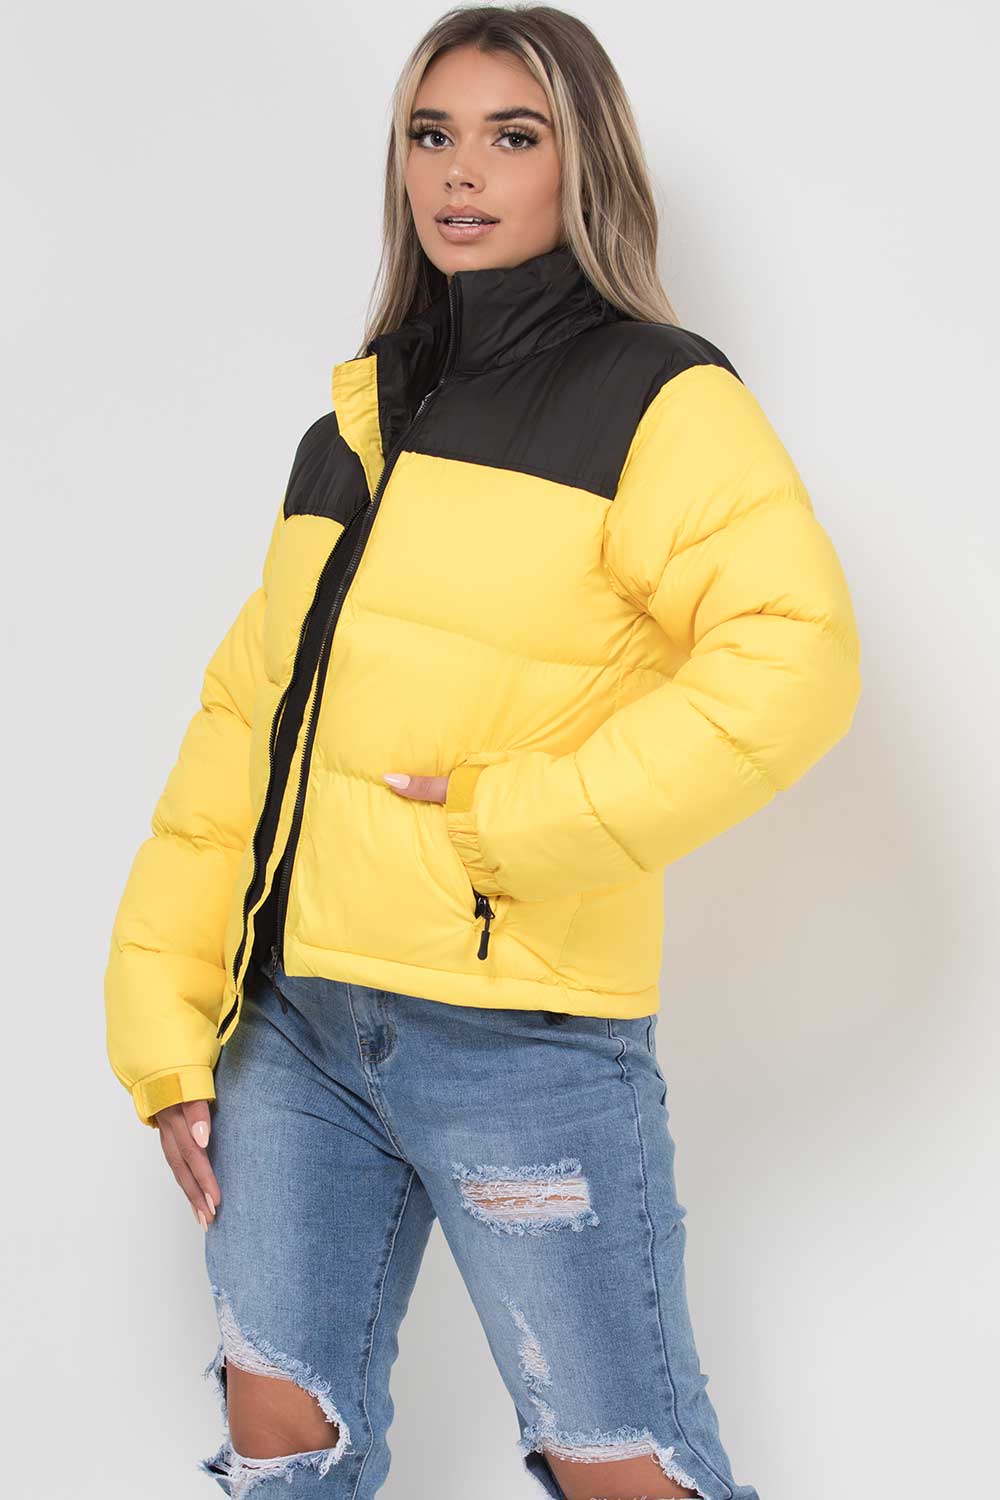 yellow puffer jacket women's